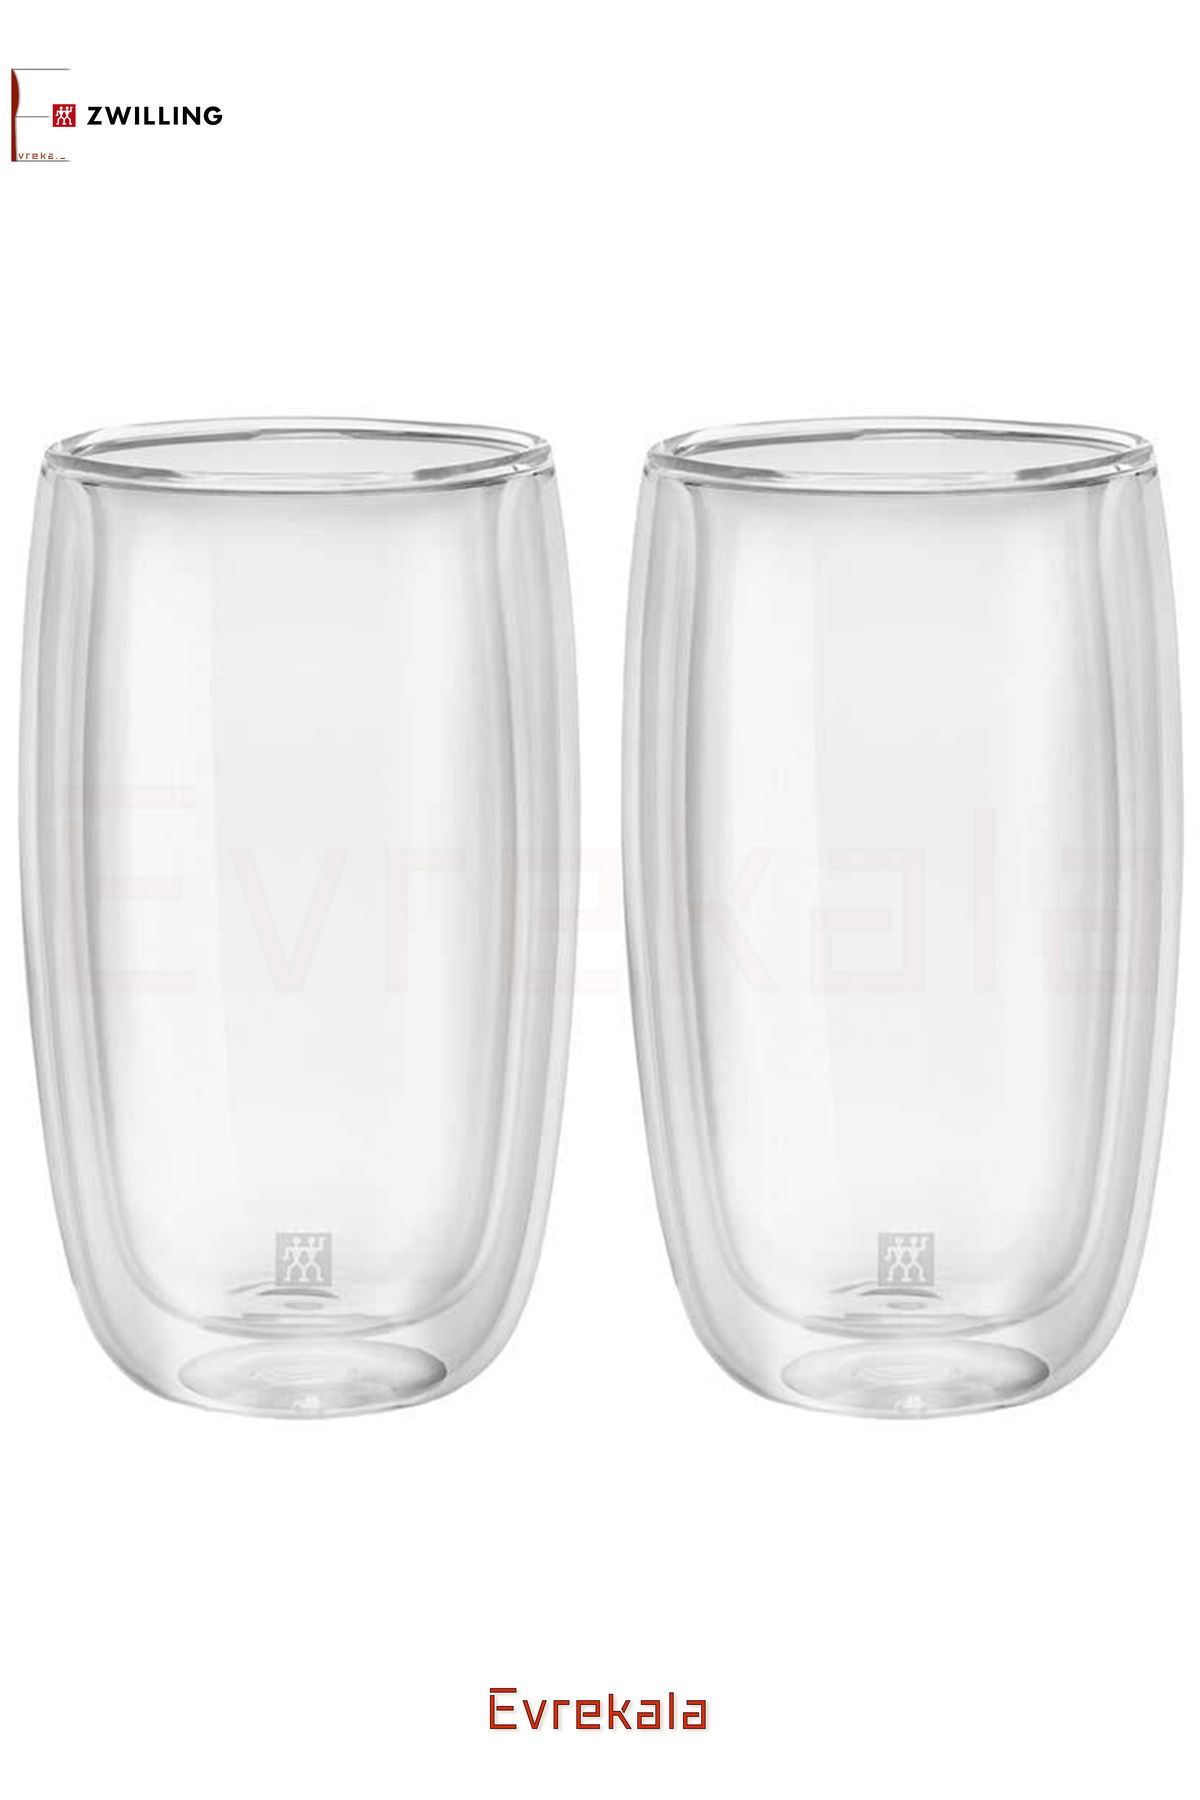 Zwilling Çift Camlı Bardak 2'li  Latta Macchiato Special Glass Set 2 Pieces